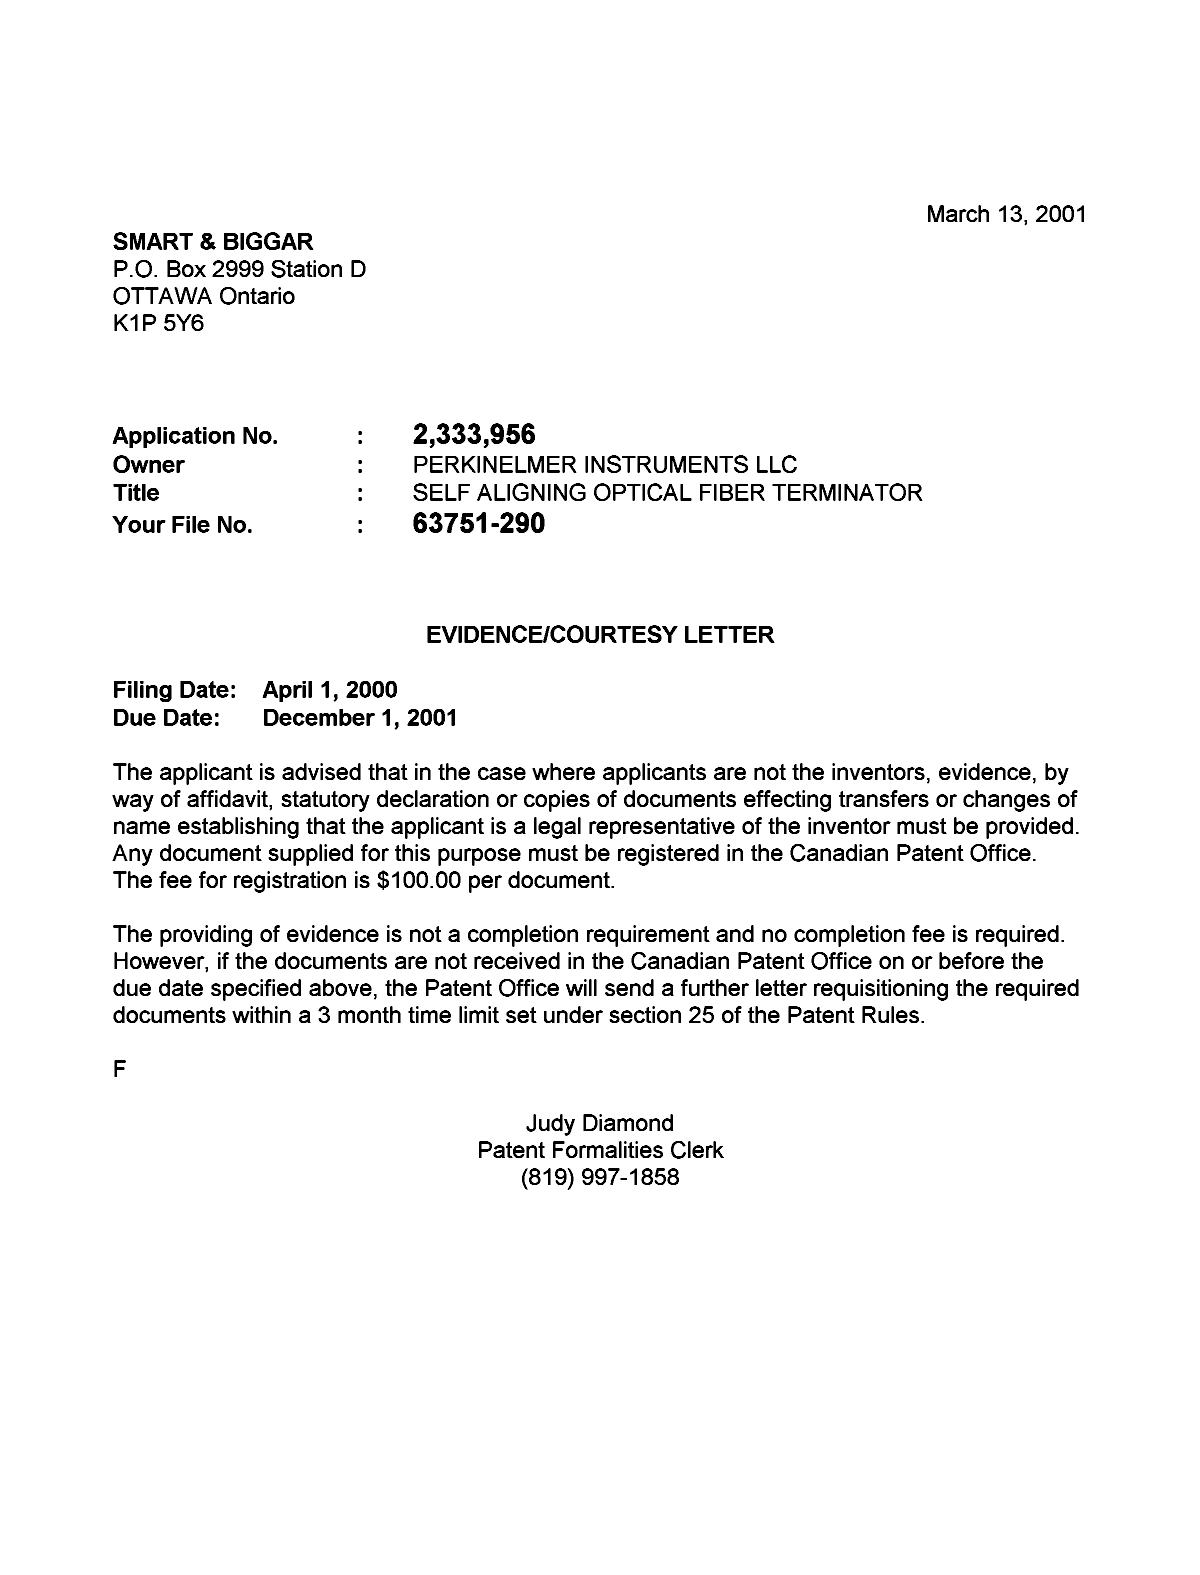 Canadian Patent Document 2333956. Correspondence 20010306. Image 1 of 1